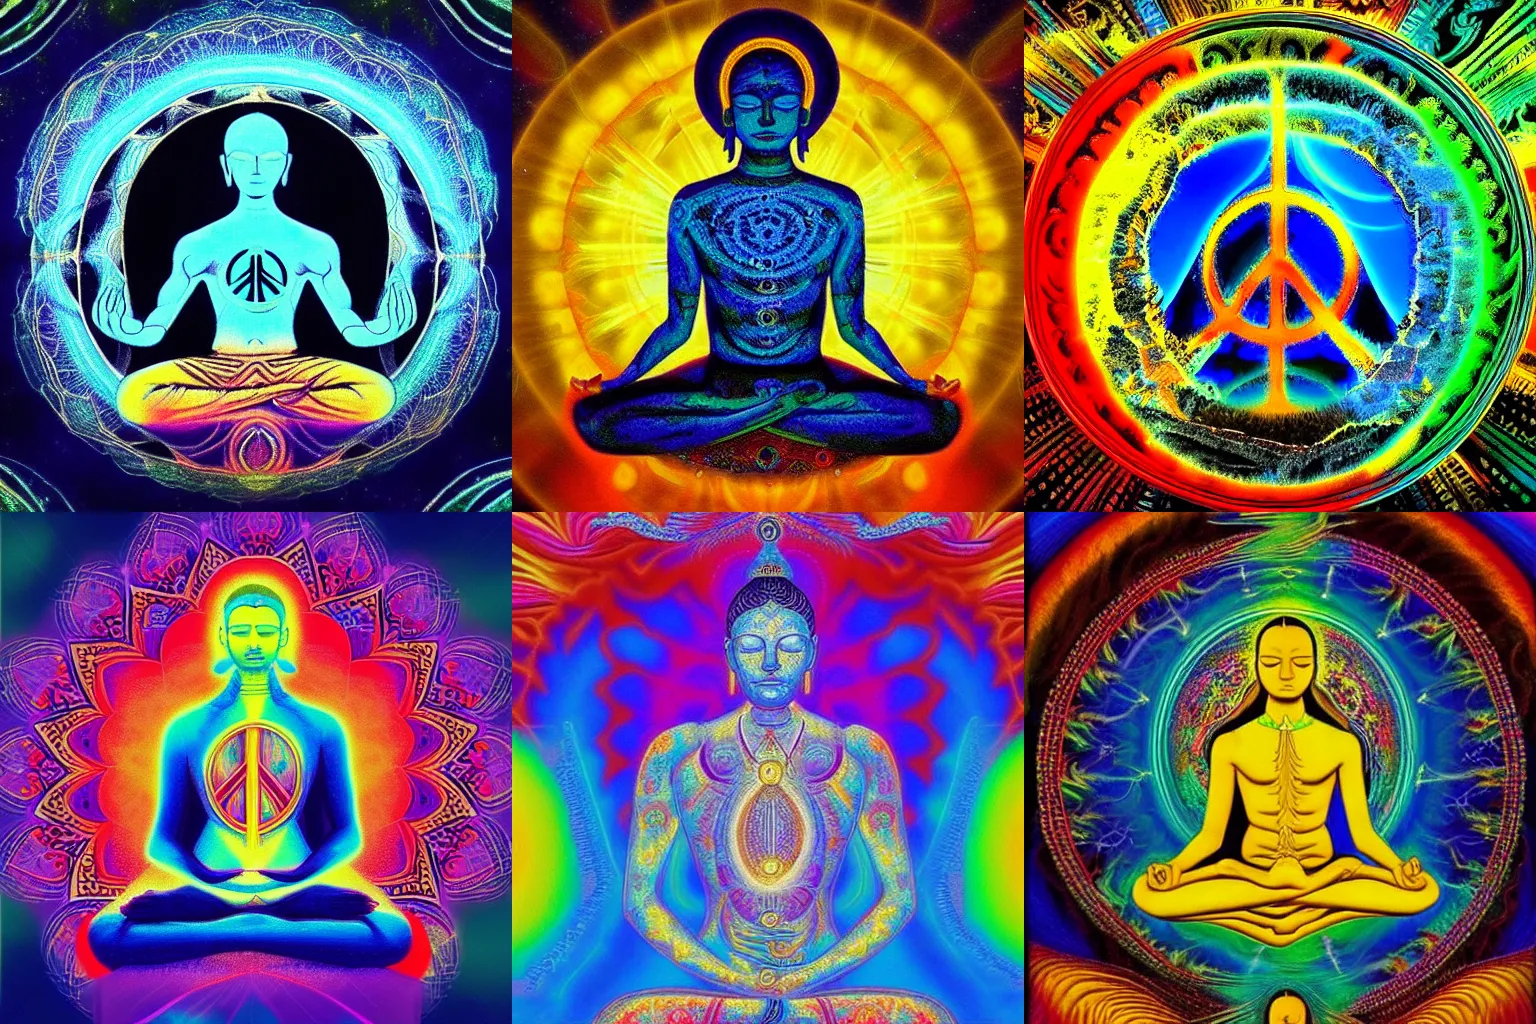 Image similar to human meditating supreme peace immense knowledge infinite color dmt art blue black gold love